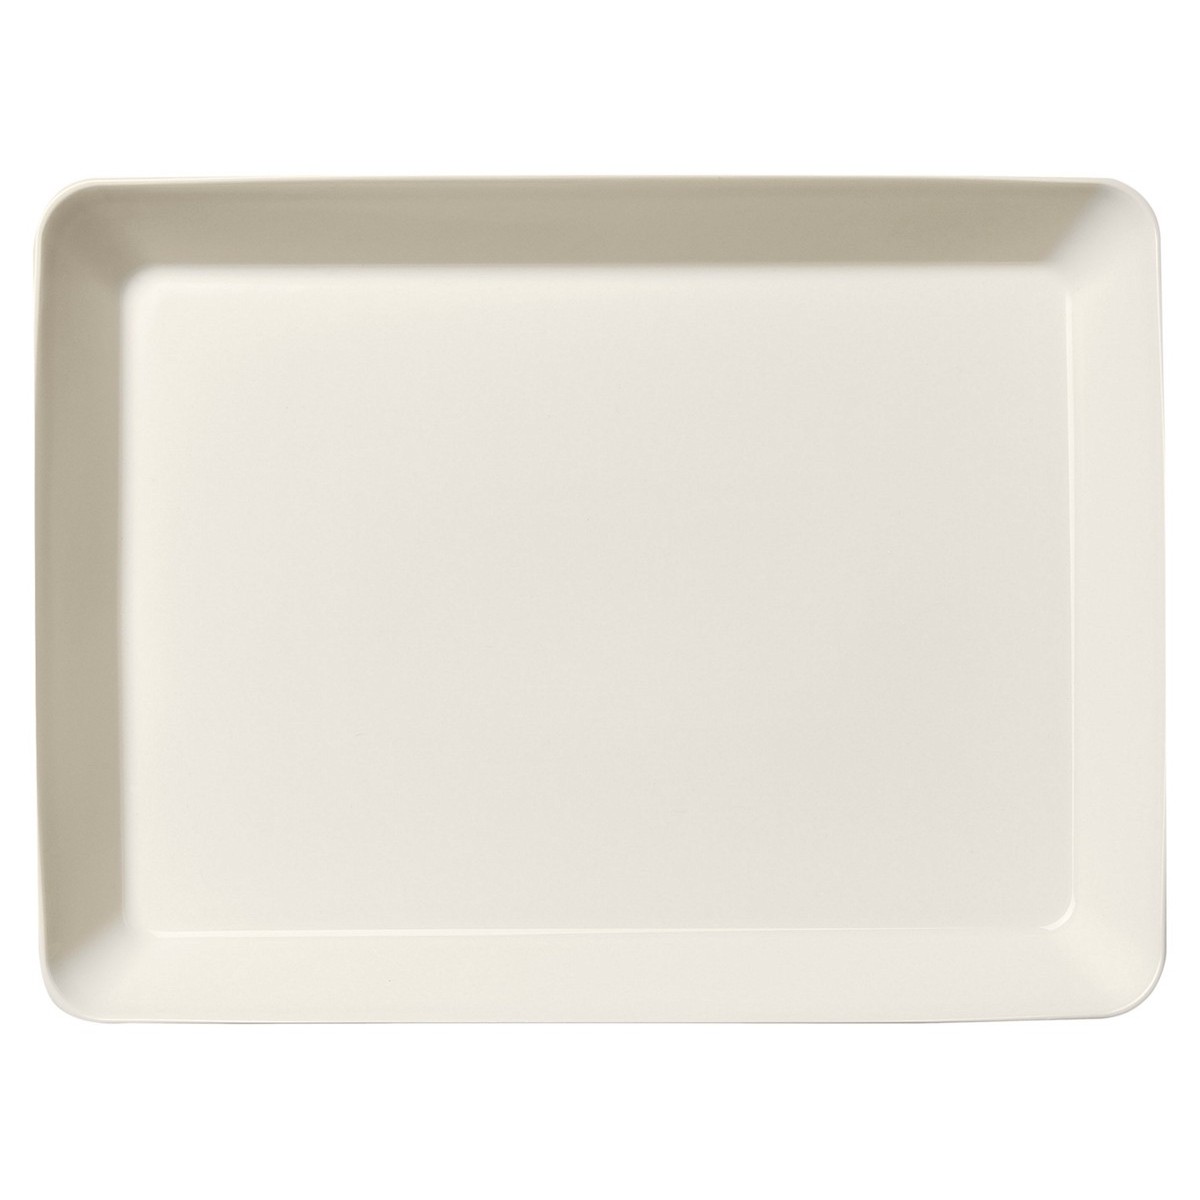 24x32cm - plat de service Teema blanc - 1005925